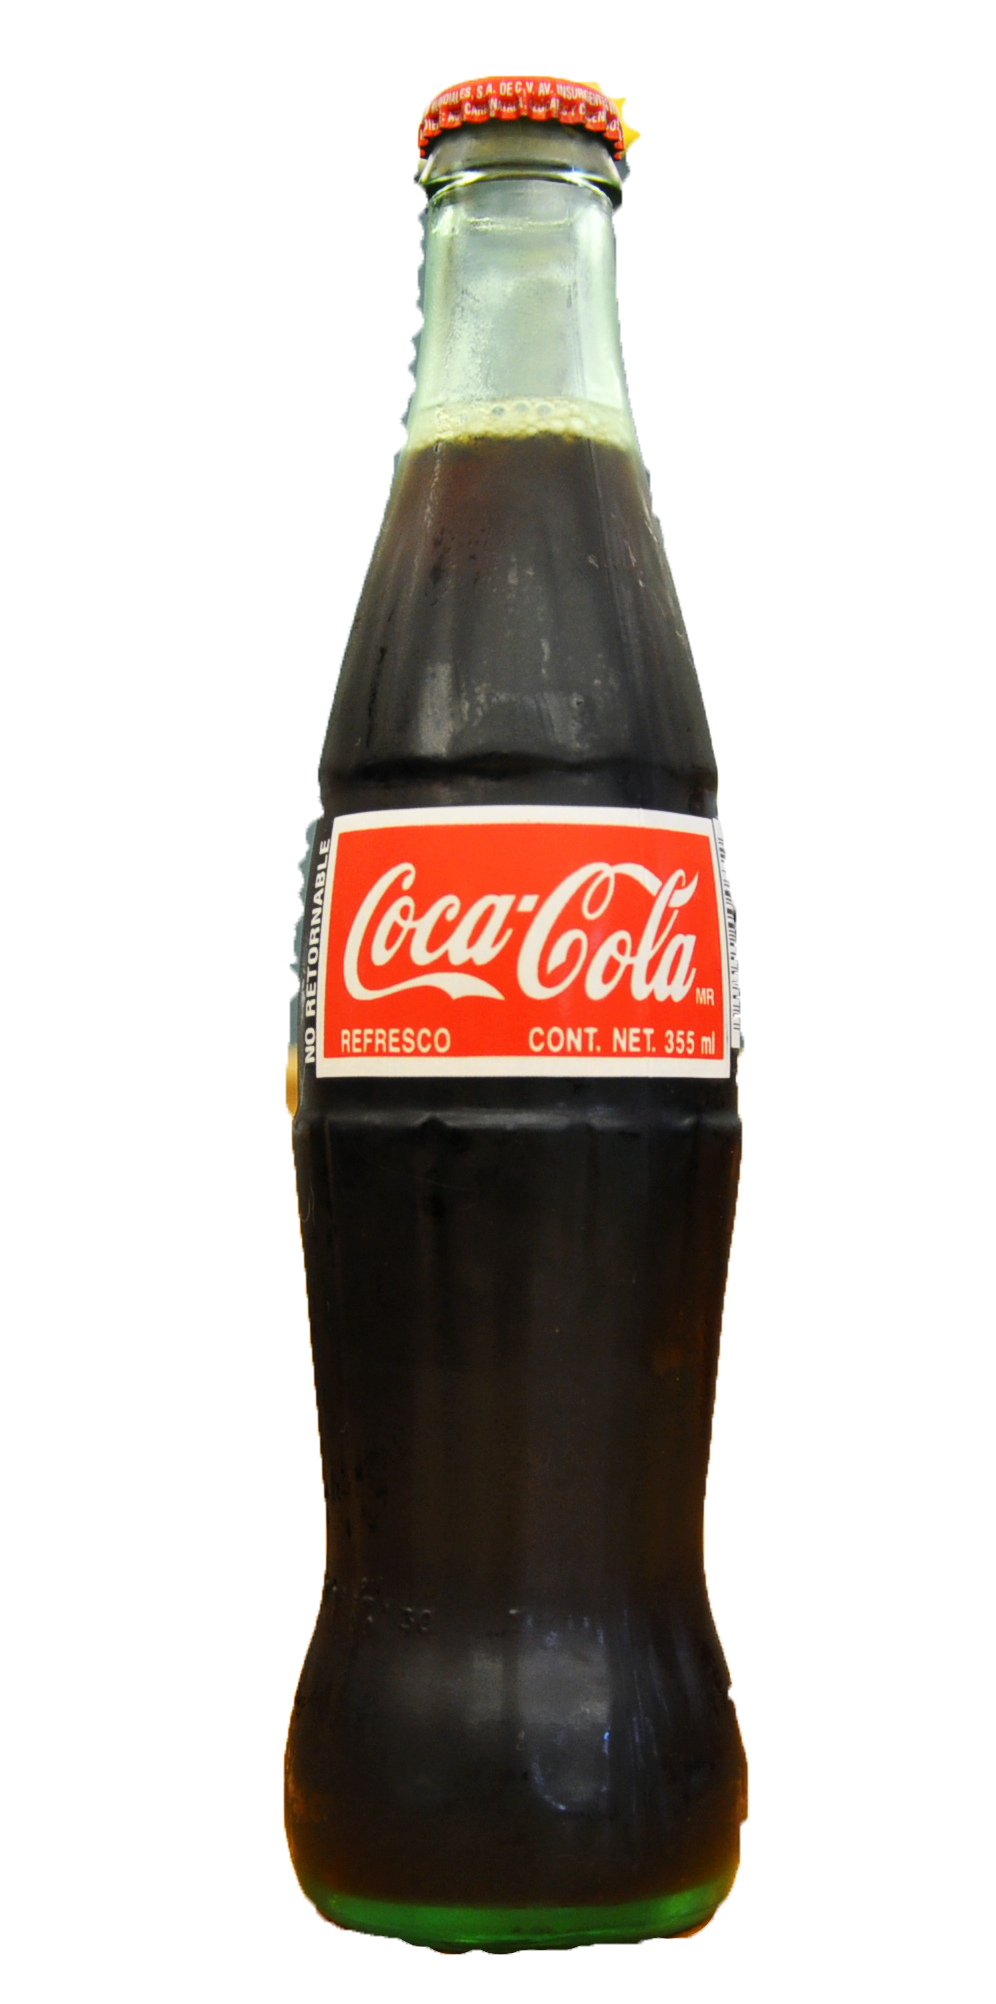 Coca cola bottle png. Image download free